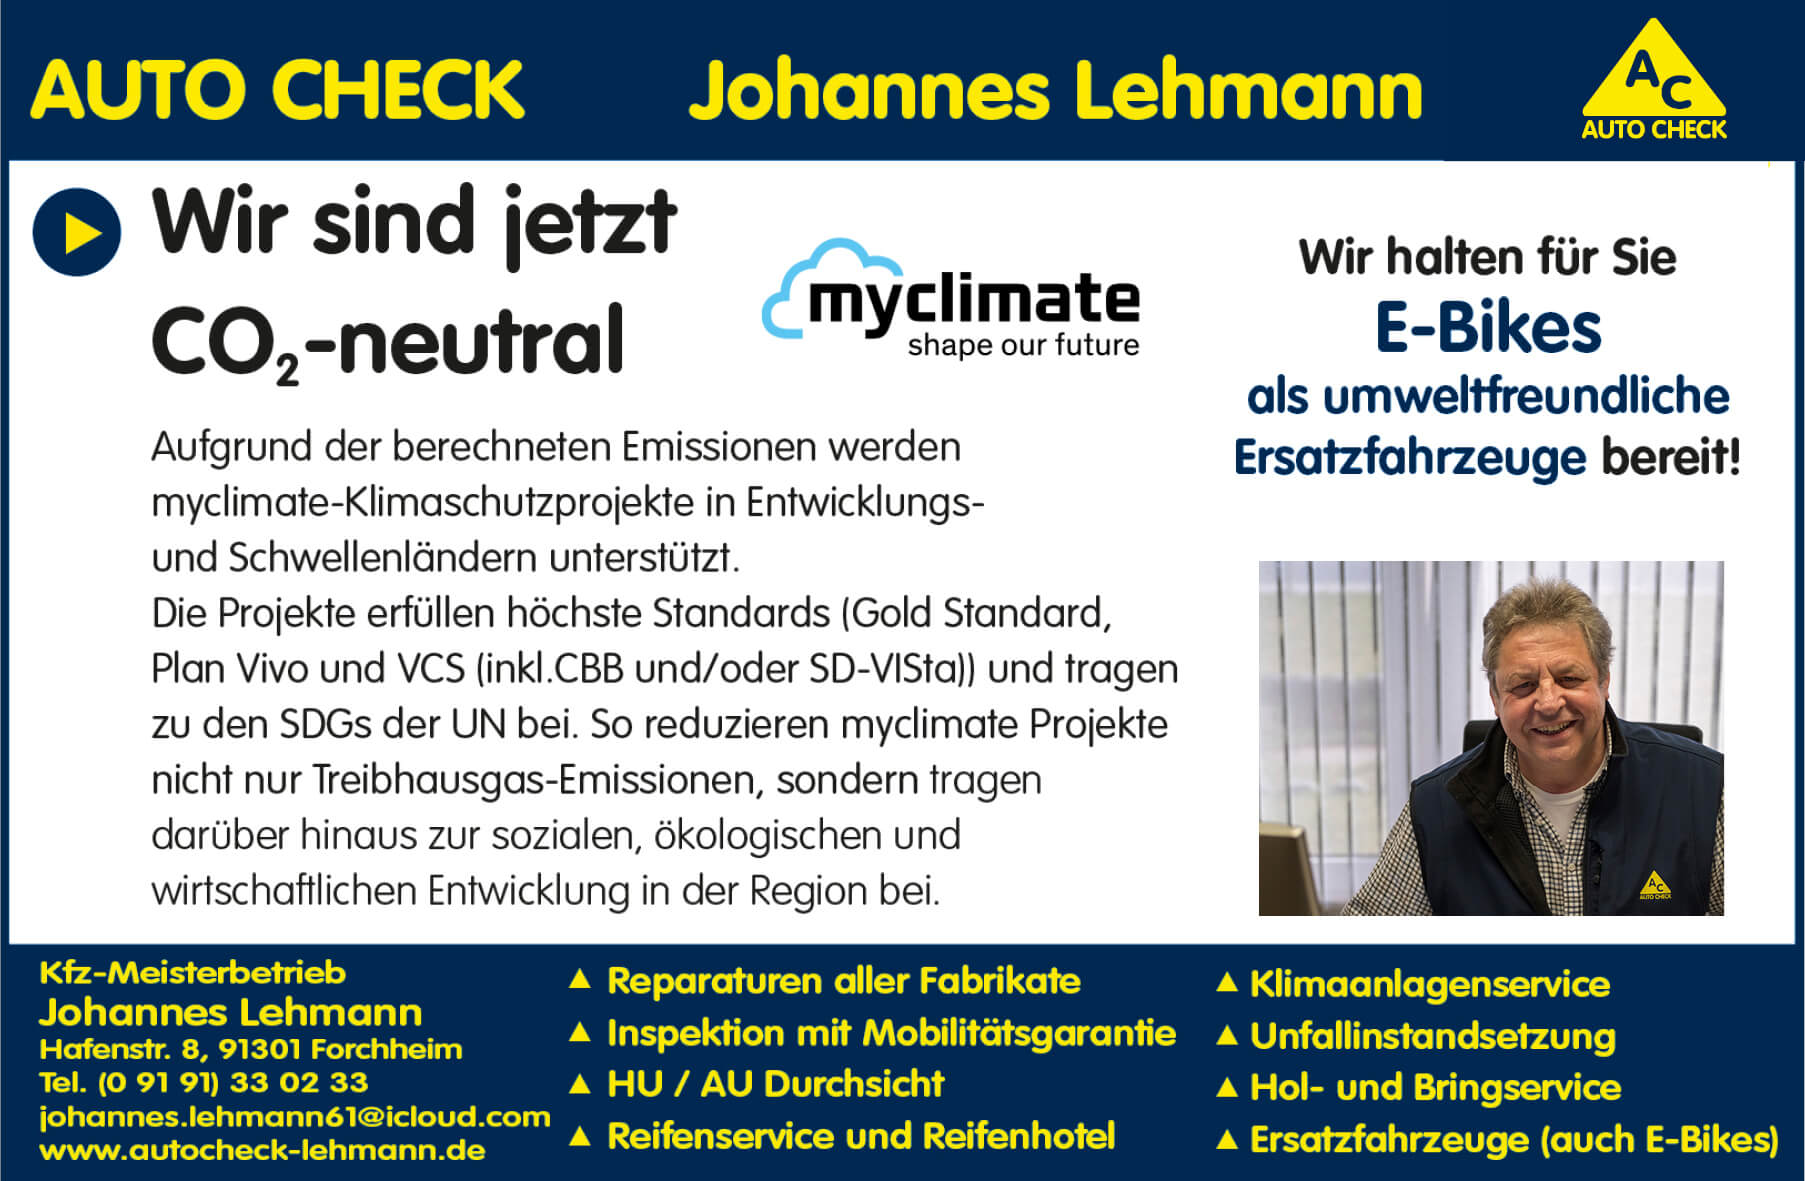 Kfz-Meisterbetrieb Johannes Lehmann CO2-neutral